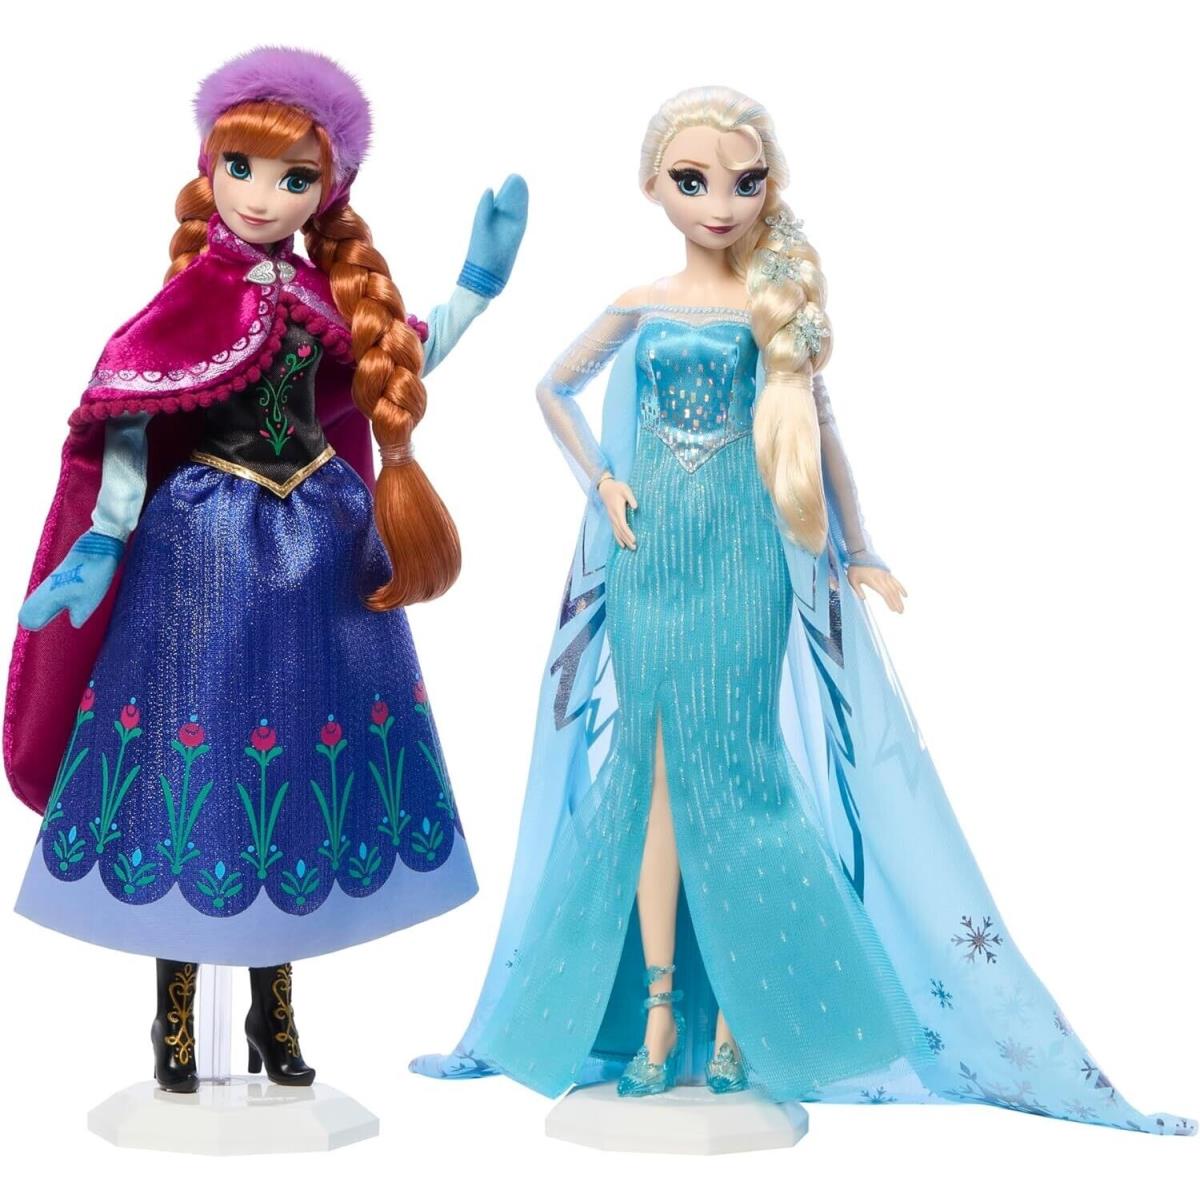 Mattel Disney Frozen Anna Elsa Dolls Celebrate 100 Years of Wonder in Shipperbox